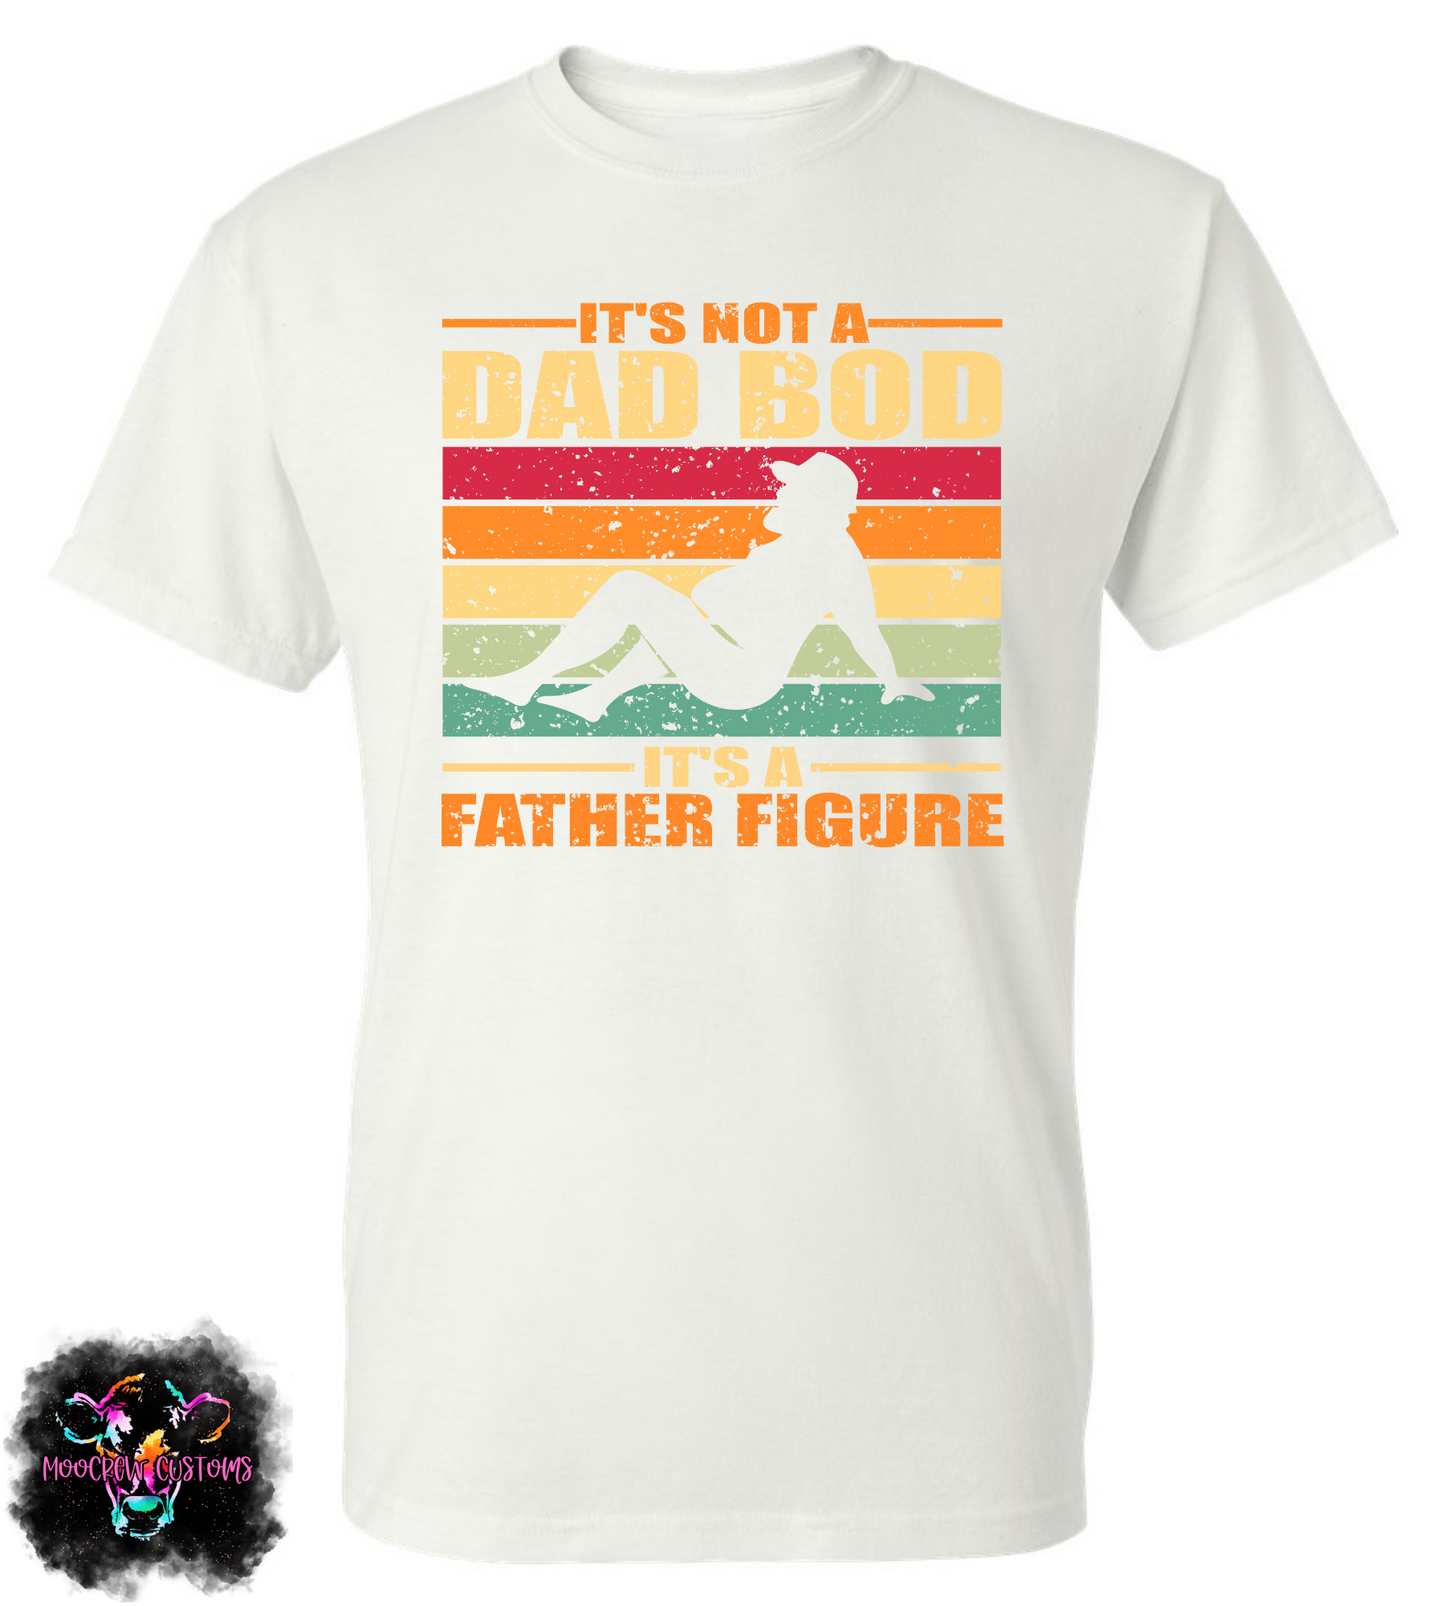 Dad Bod Silhouette Shirt